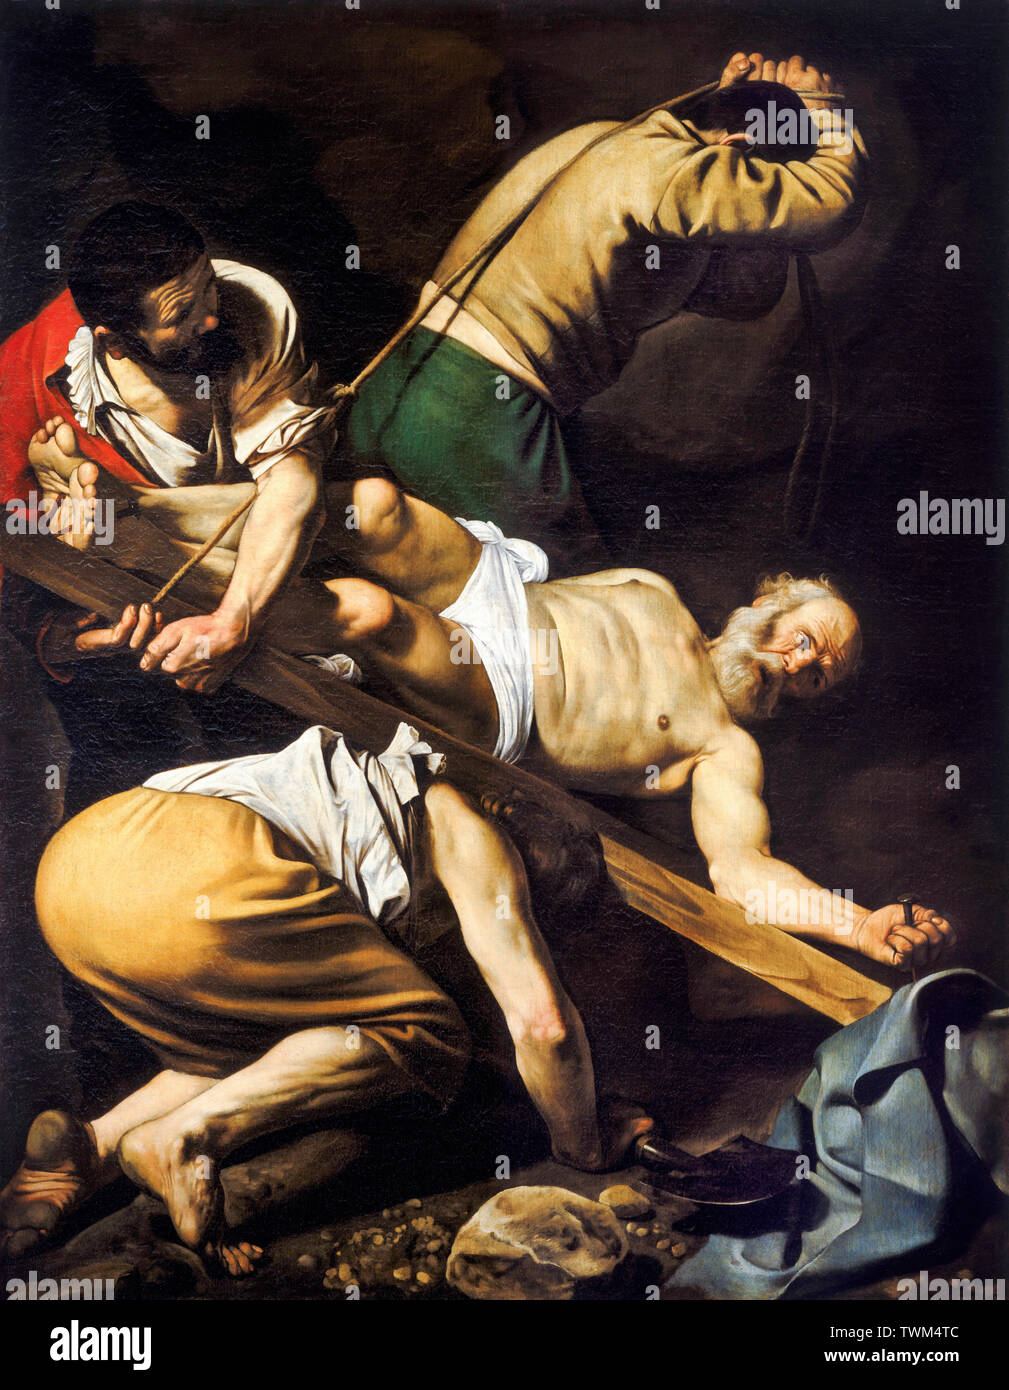 Caravaggio, Crucifixion of Saint Peter, Baroque painting, circa 1600 Stock Photo